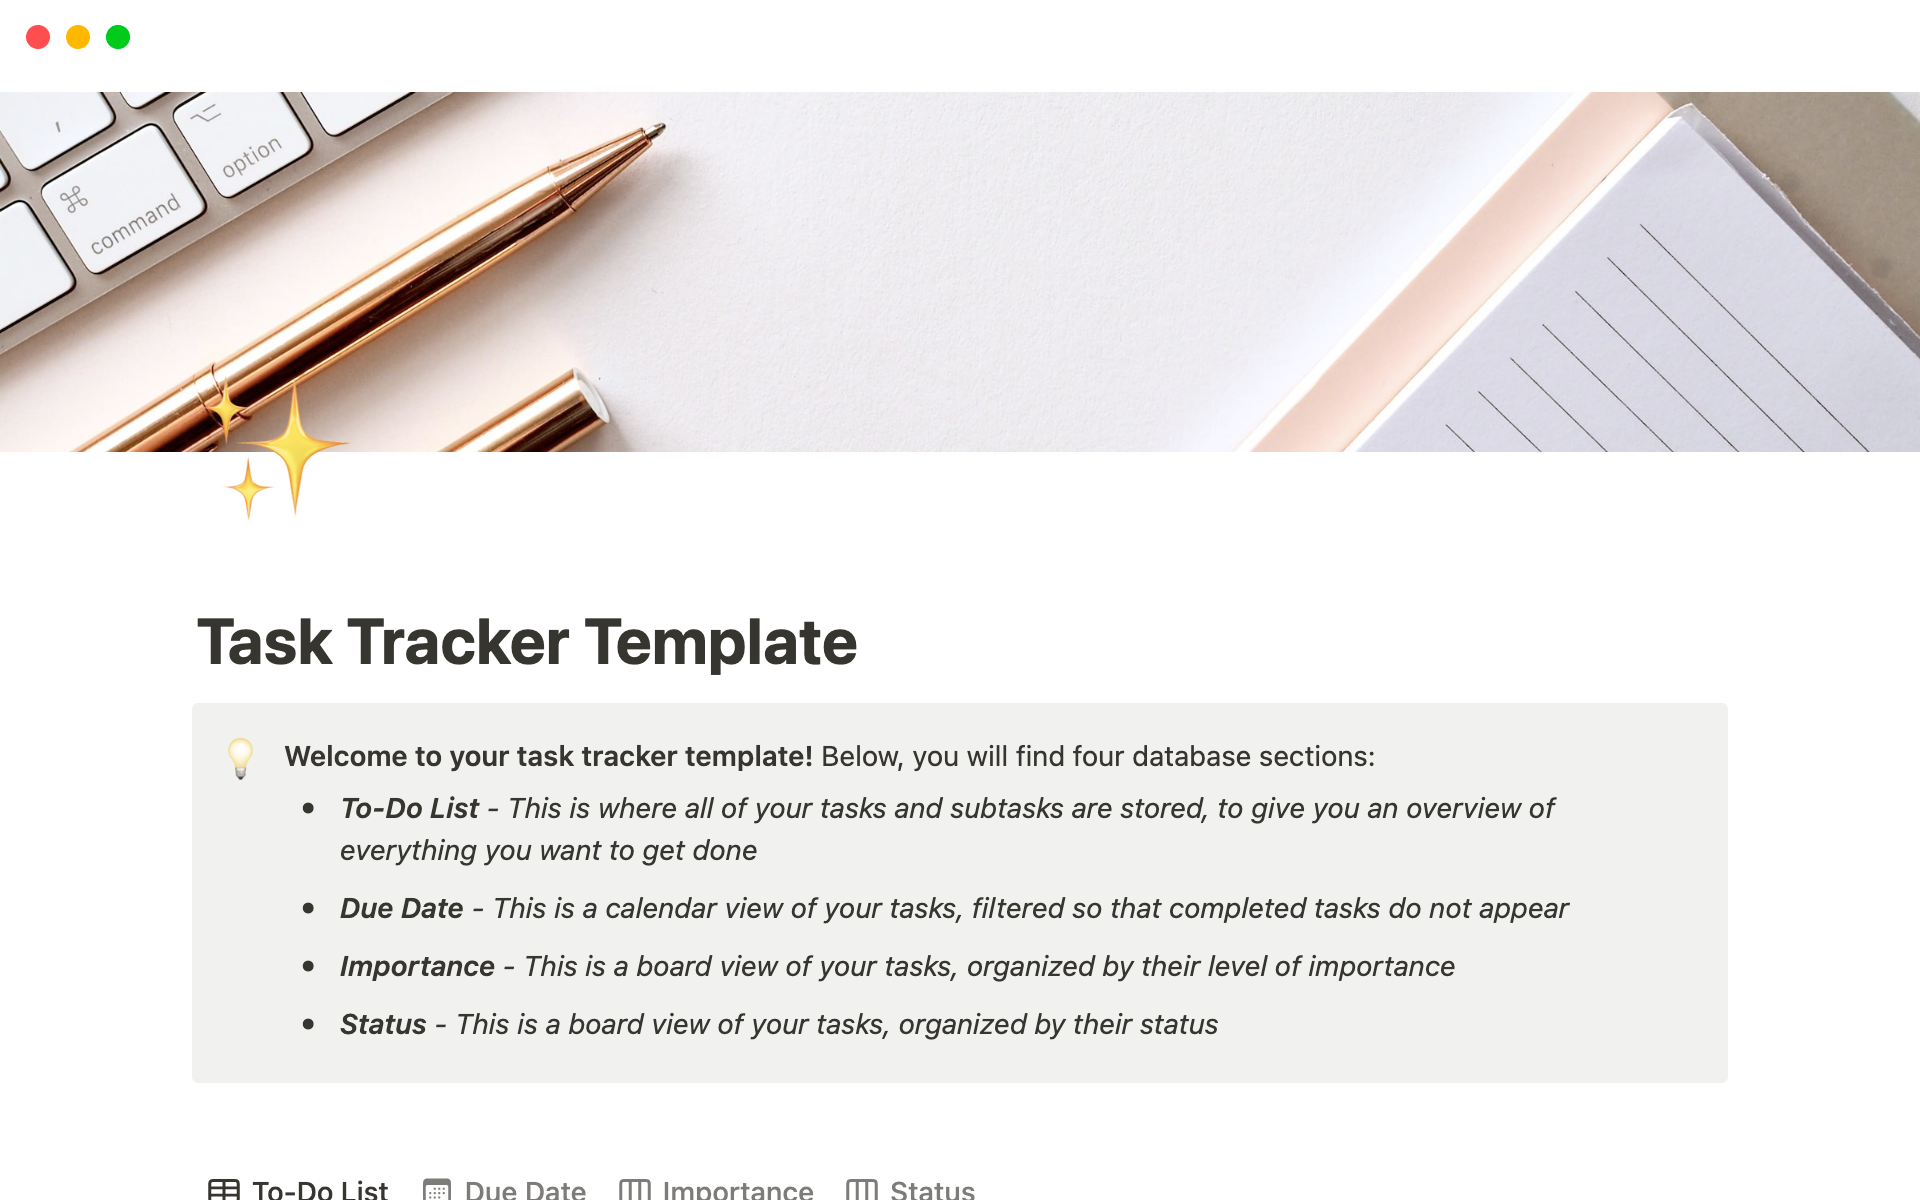 Aperçu du modèle de Task Tracker